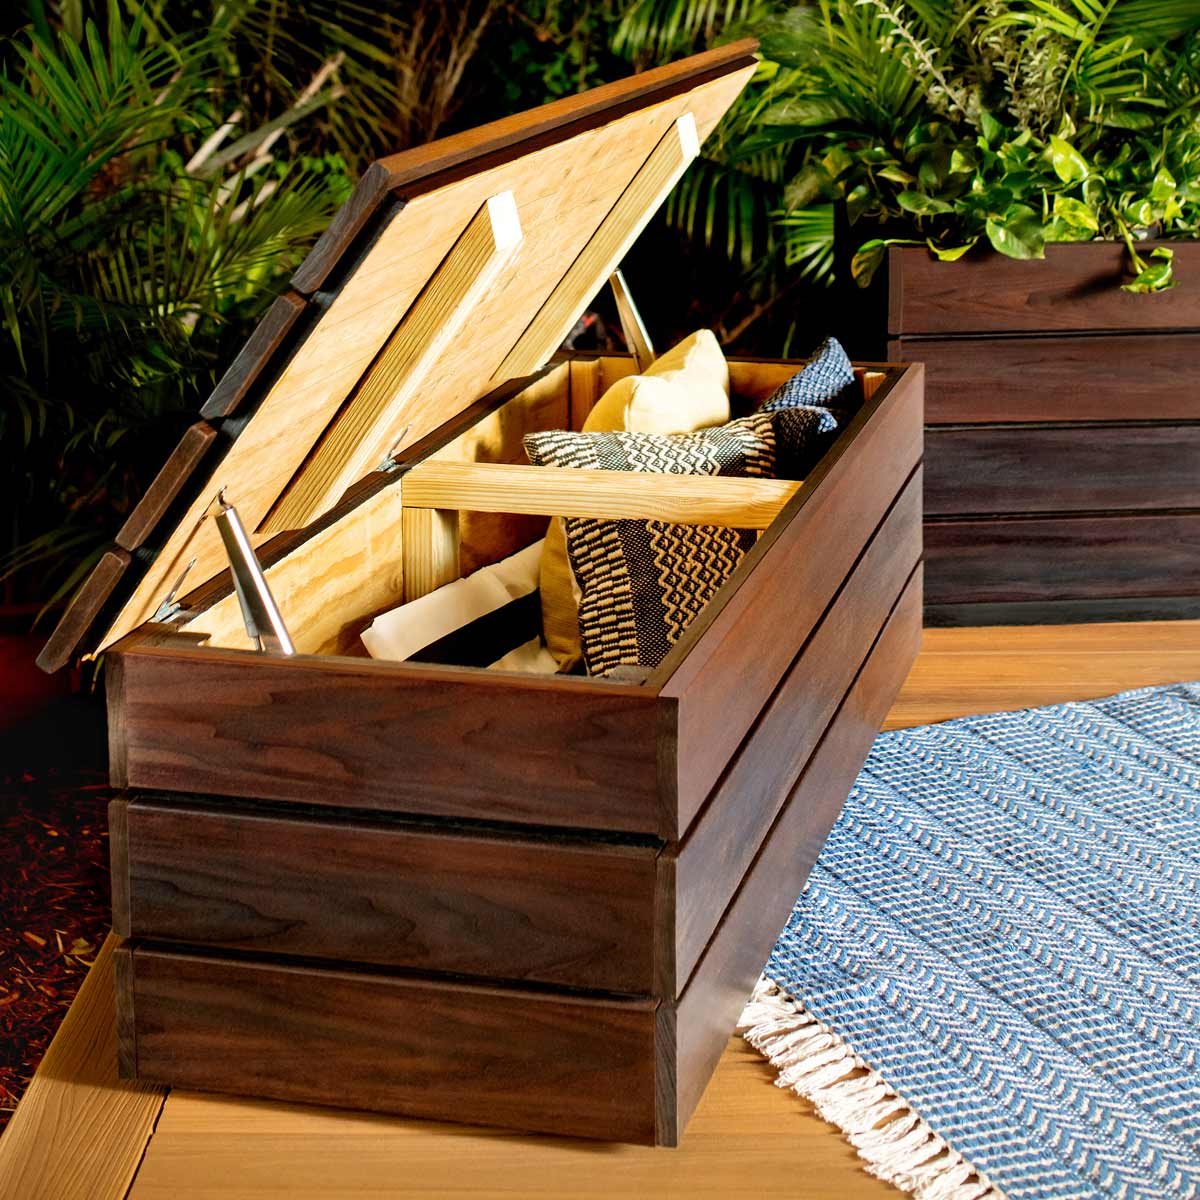 Build An Outdoor Storage Bench Diy, Wooden Outdoor Storage Bench Plans